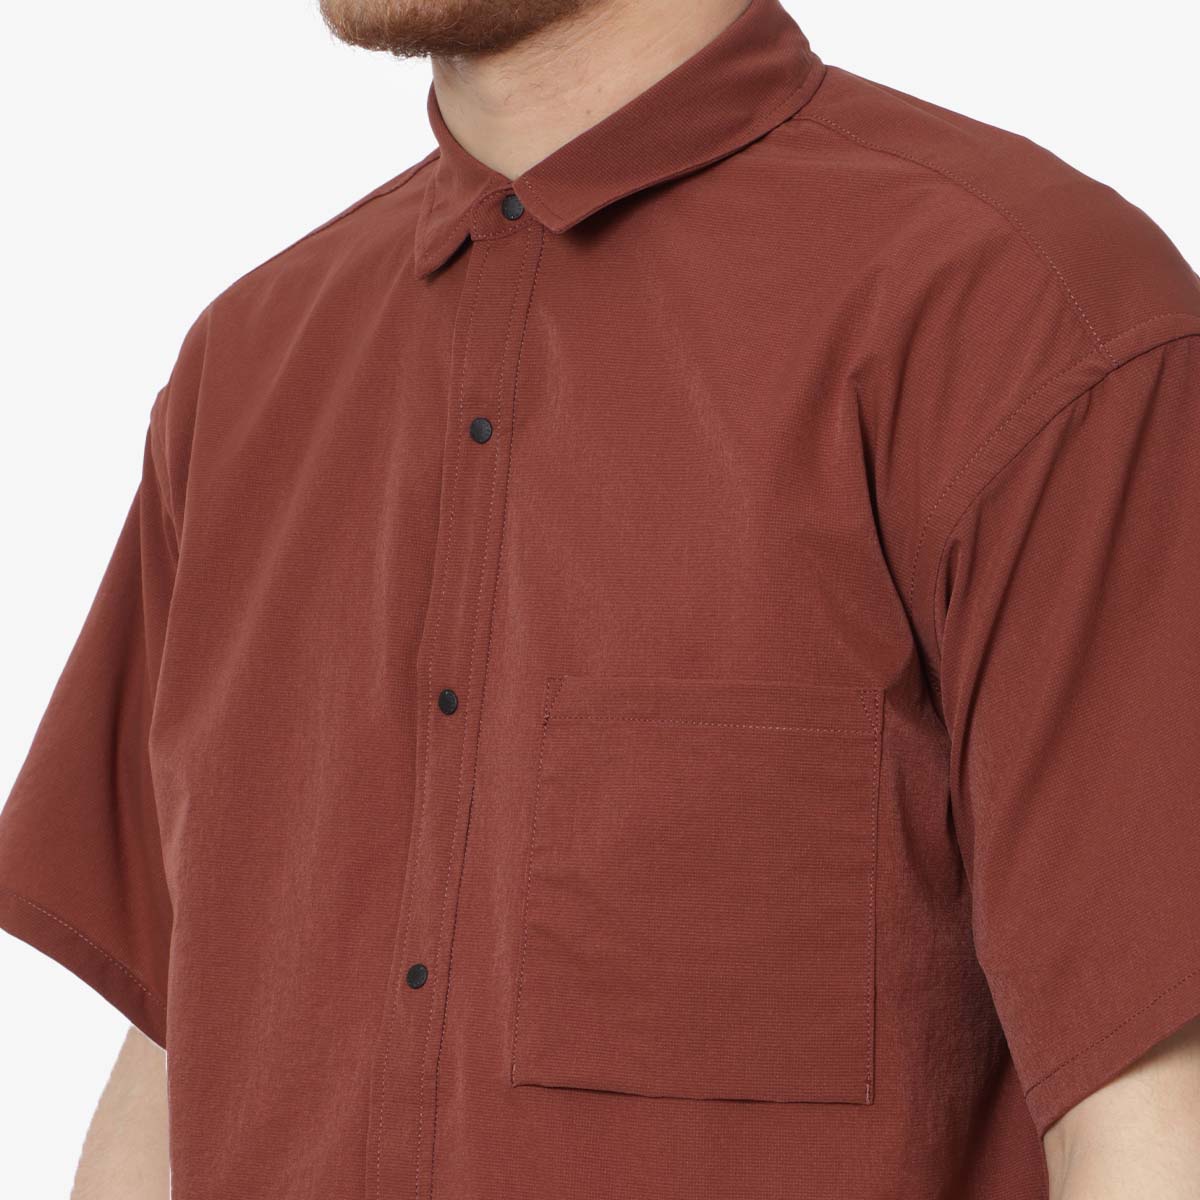 Nanga Dot Air Comfy Short Sleeve Shirt, Brown, Detail Shot 2